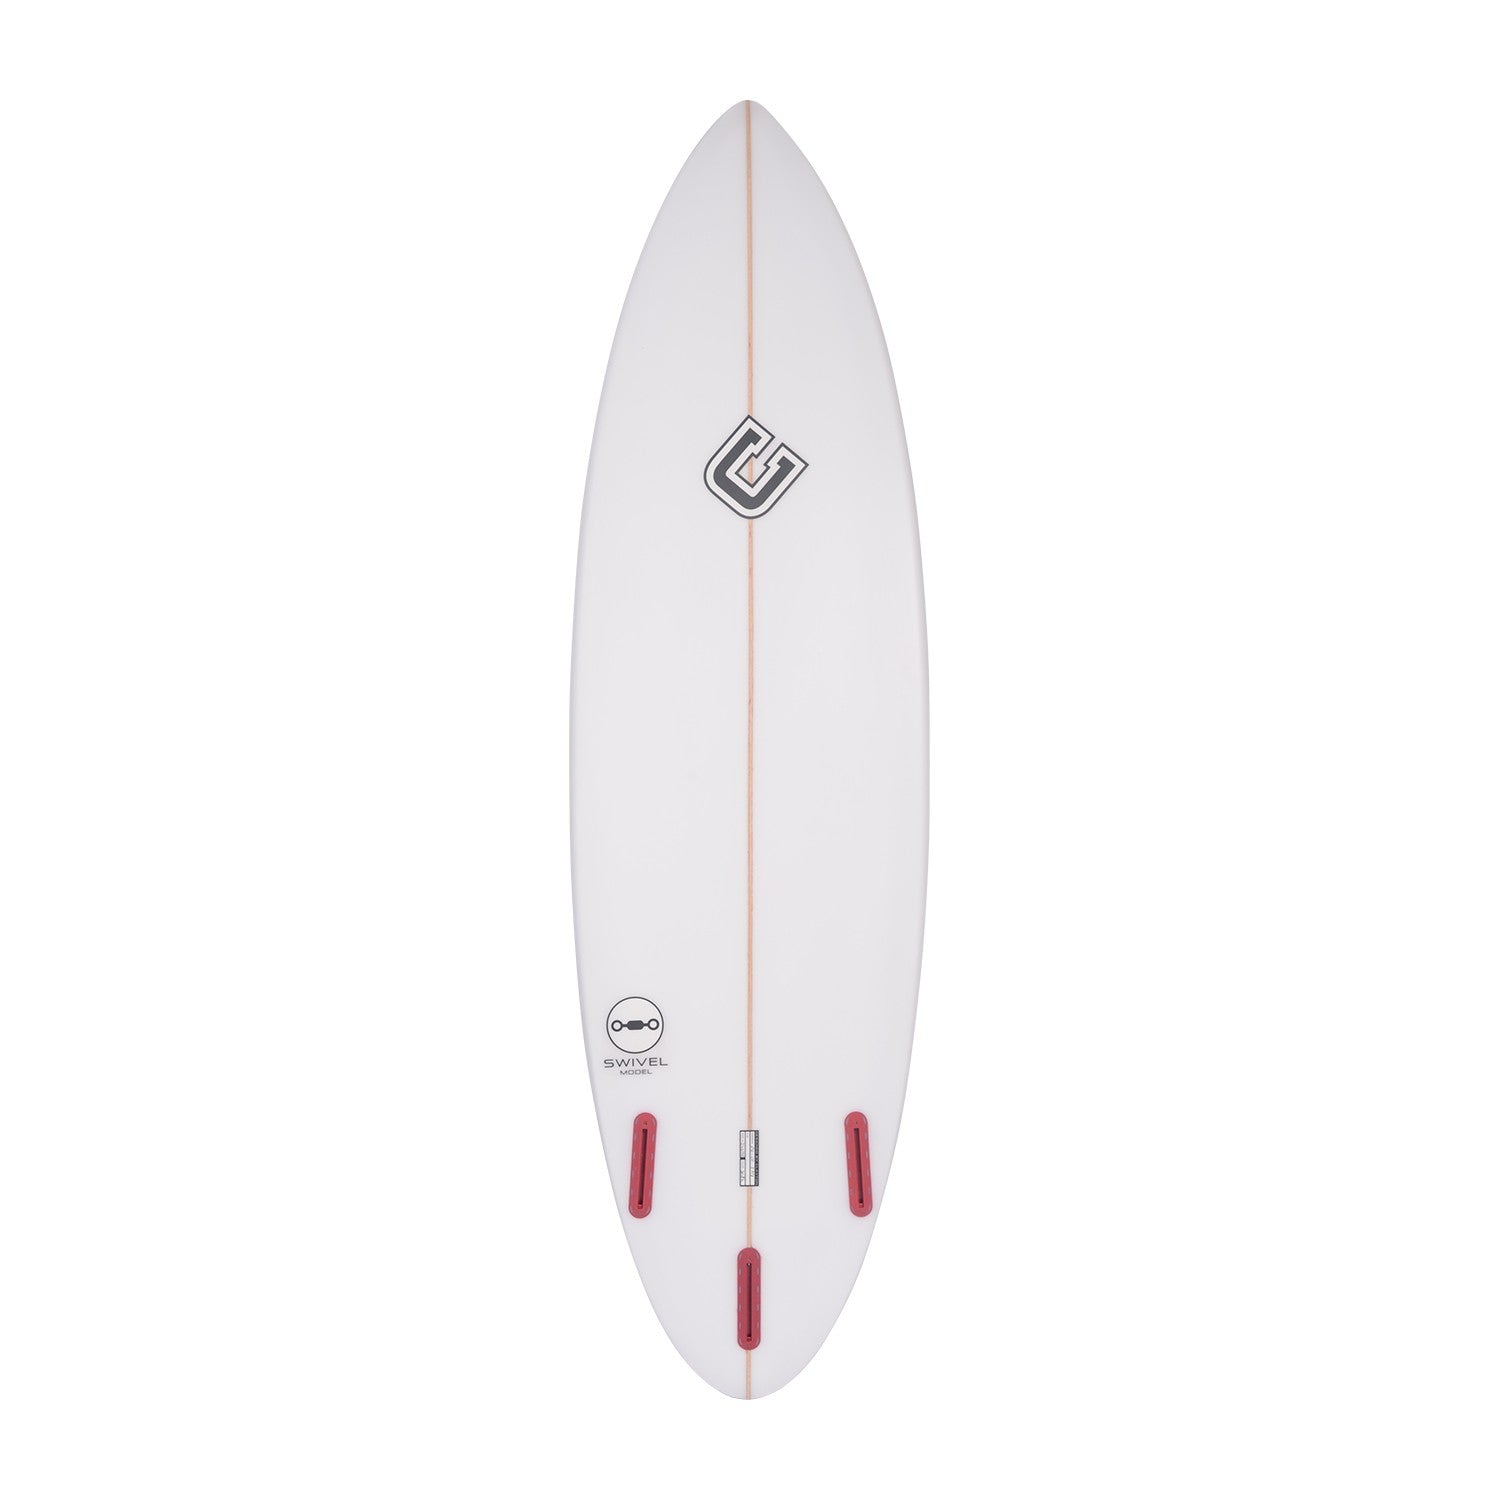 CLAYTON Surfboards - Swivel (PU) Futures - 6'2